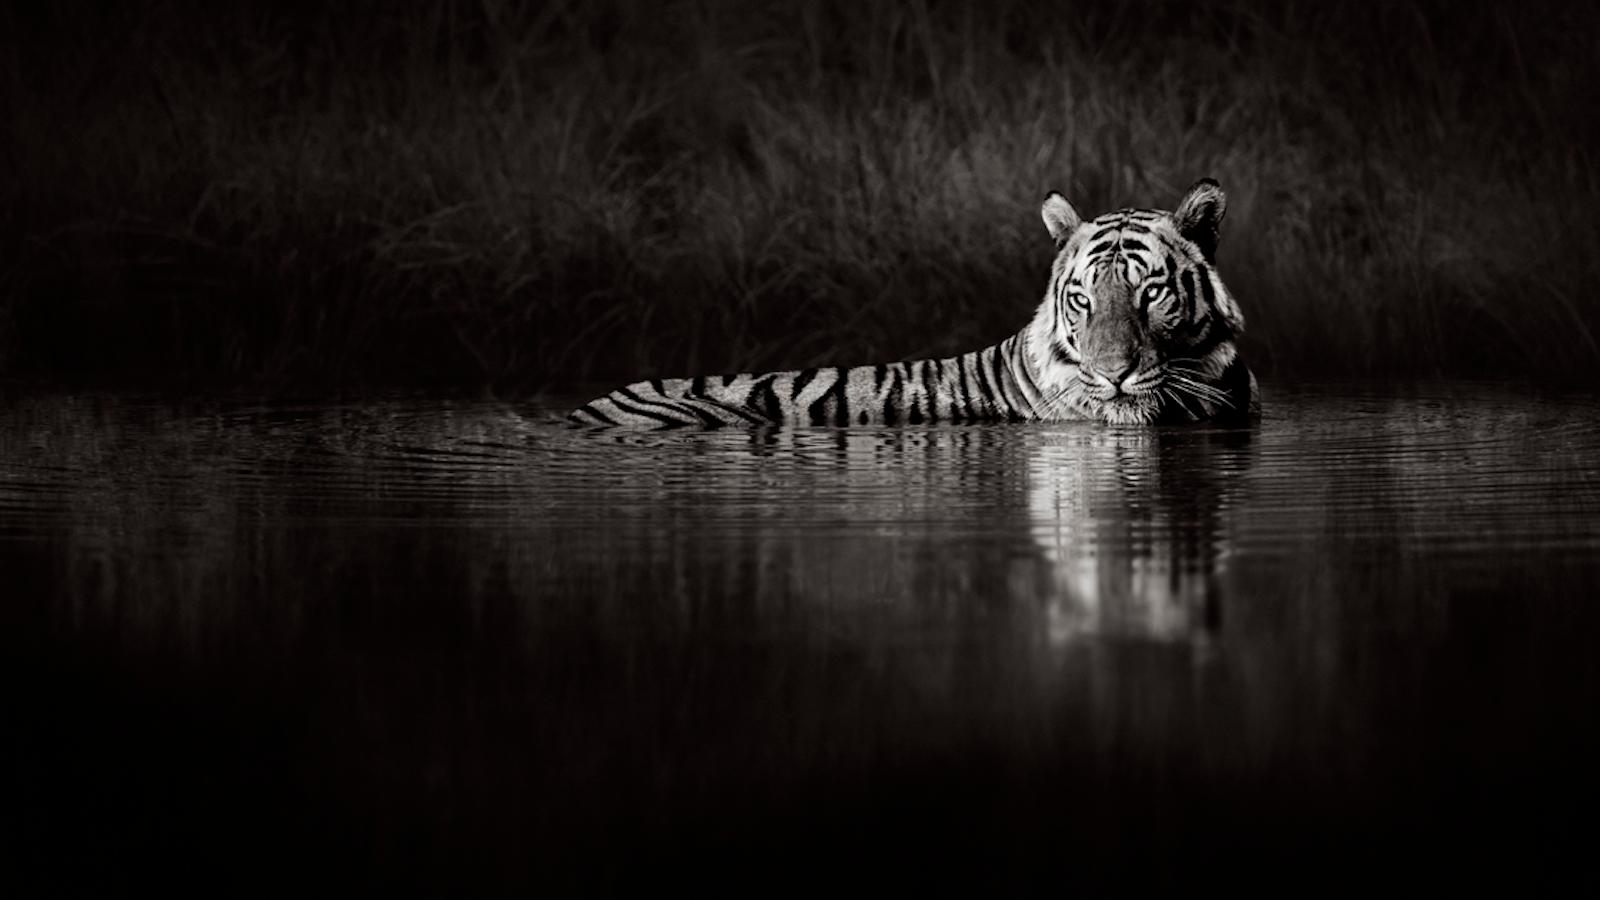 Drew Doggett Black and White Photograph - Tiger's Retreat